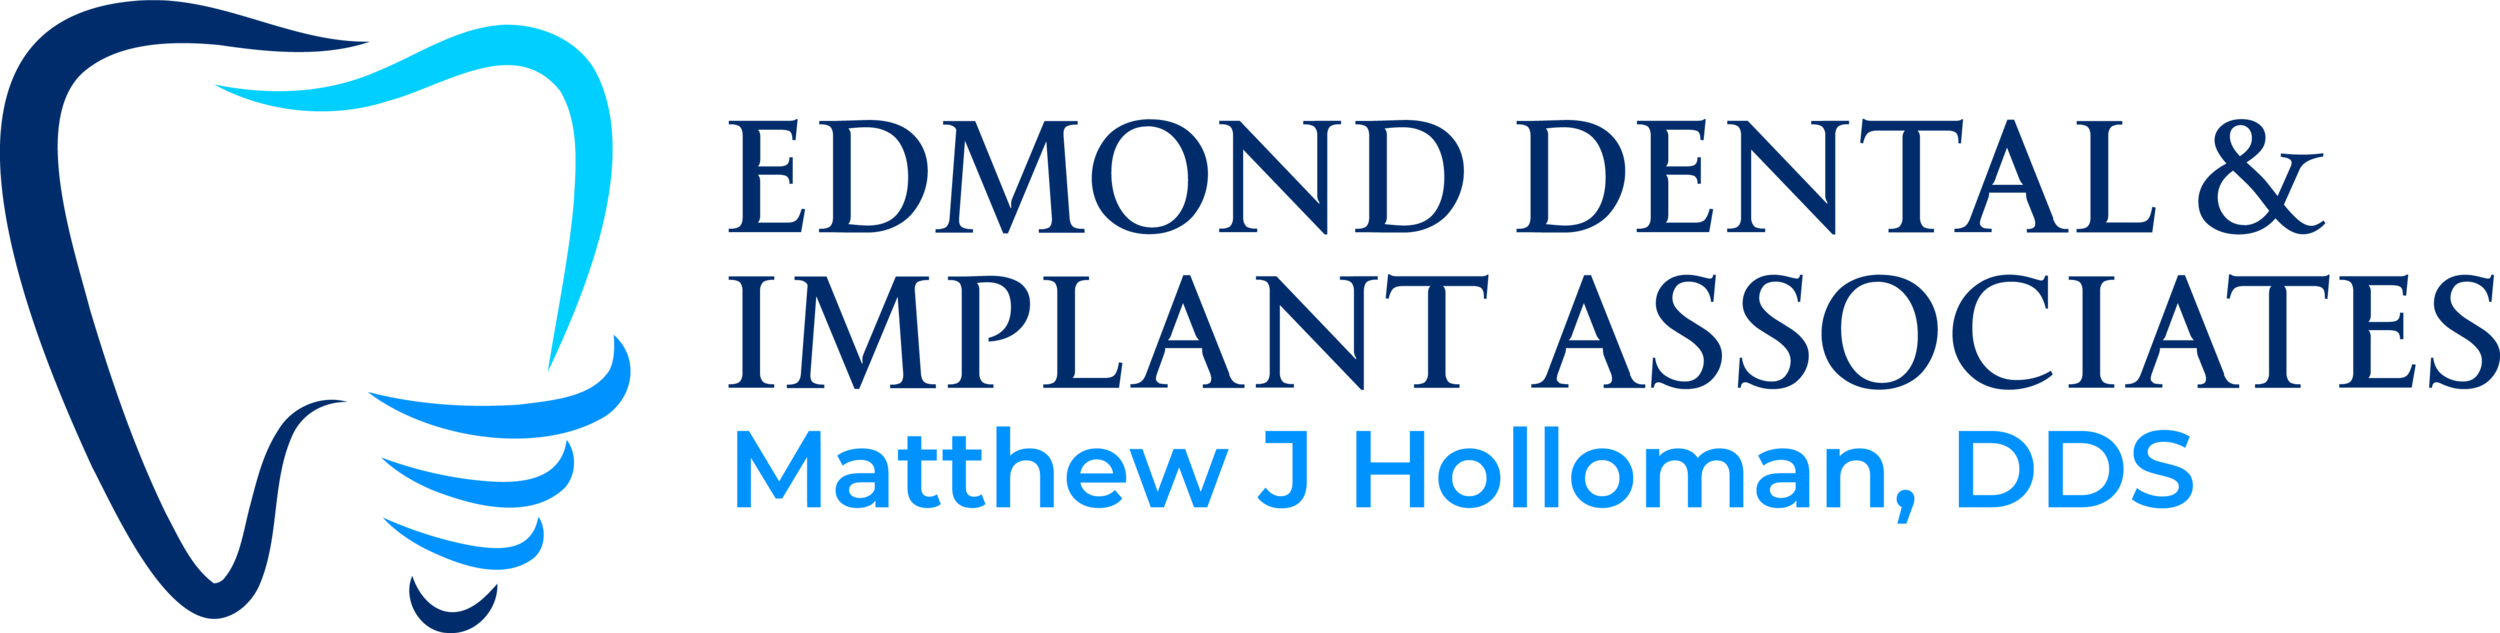 Edmond Dental and Implant Associates